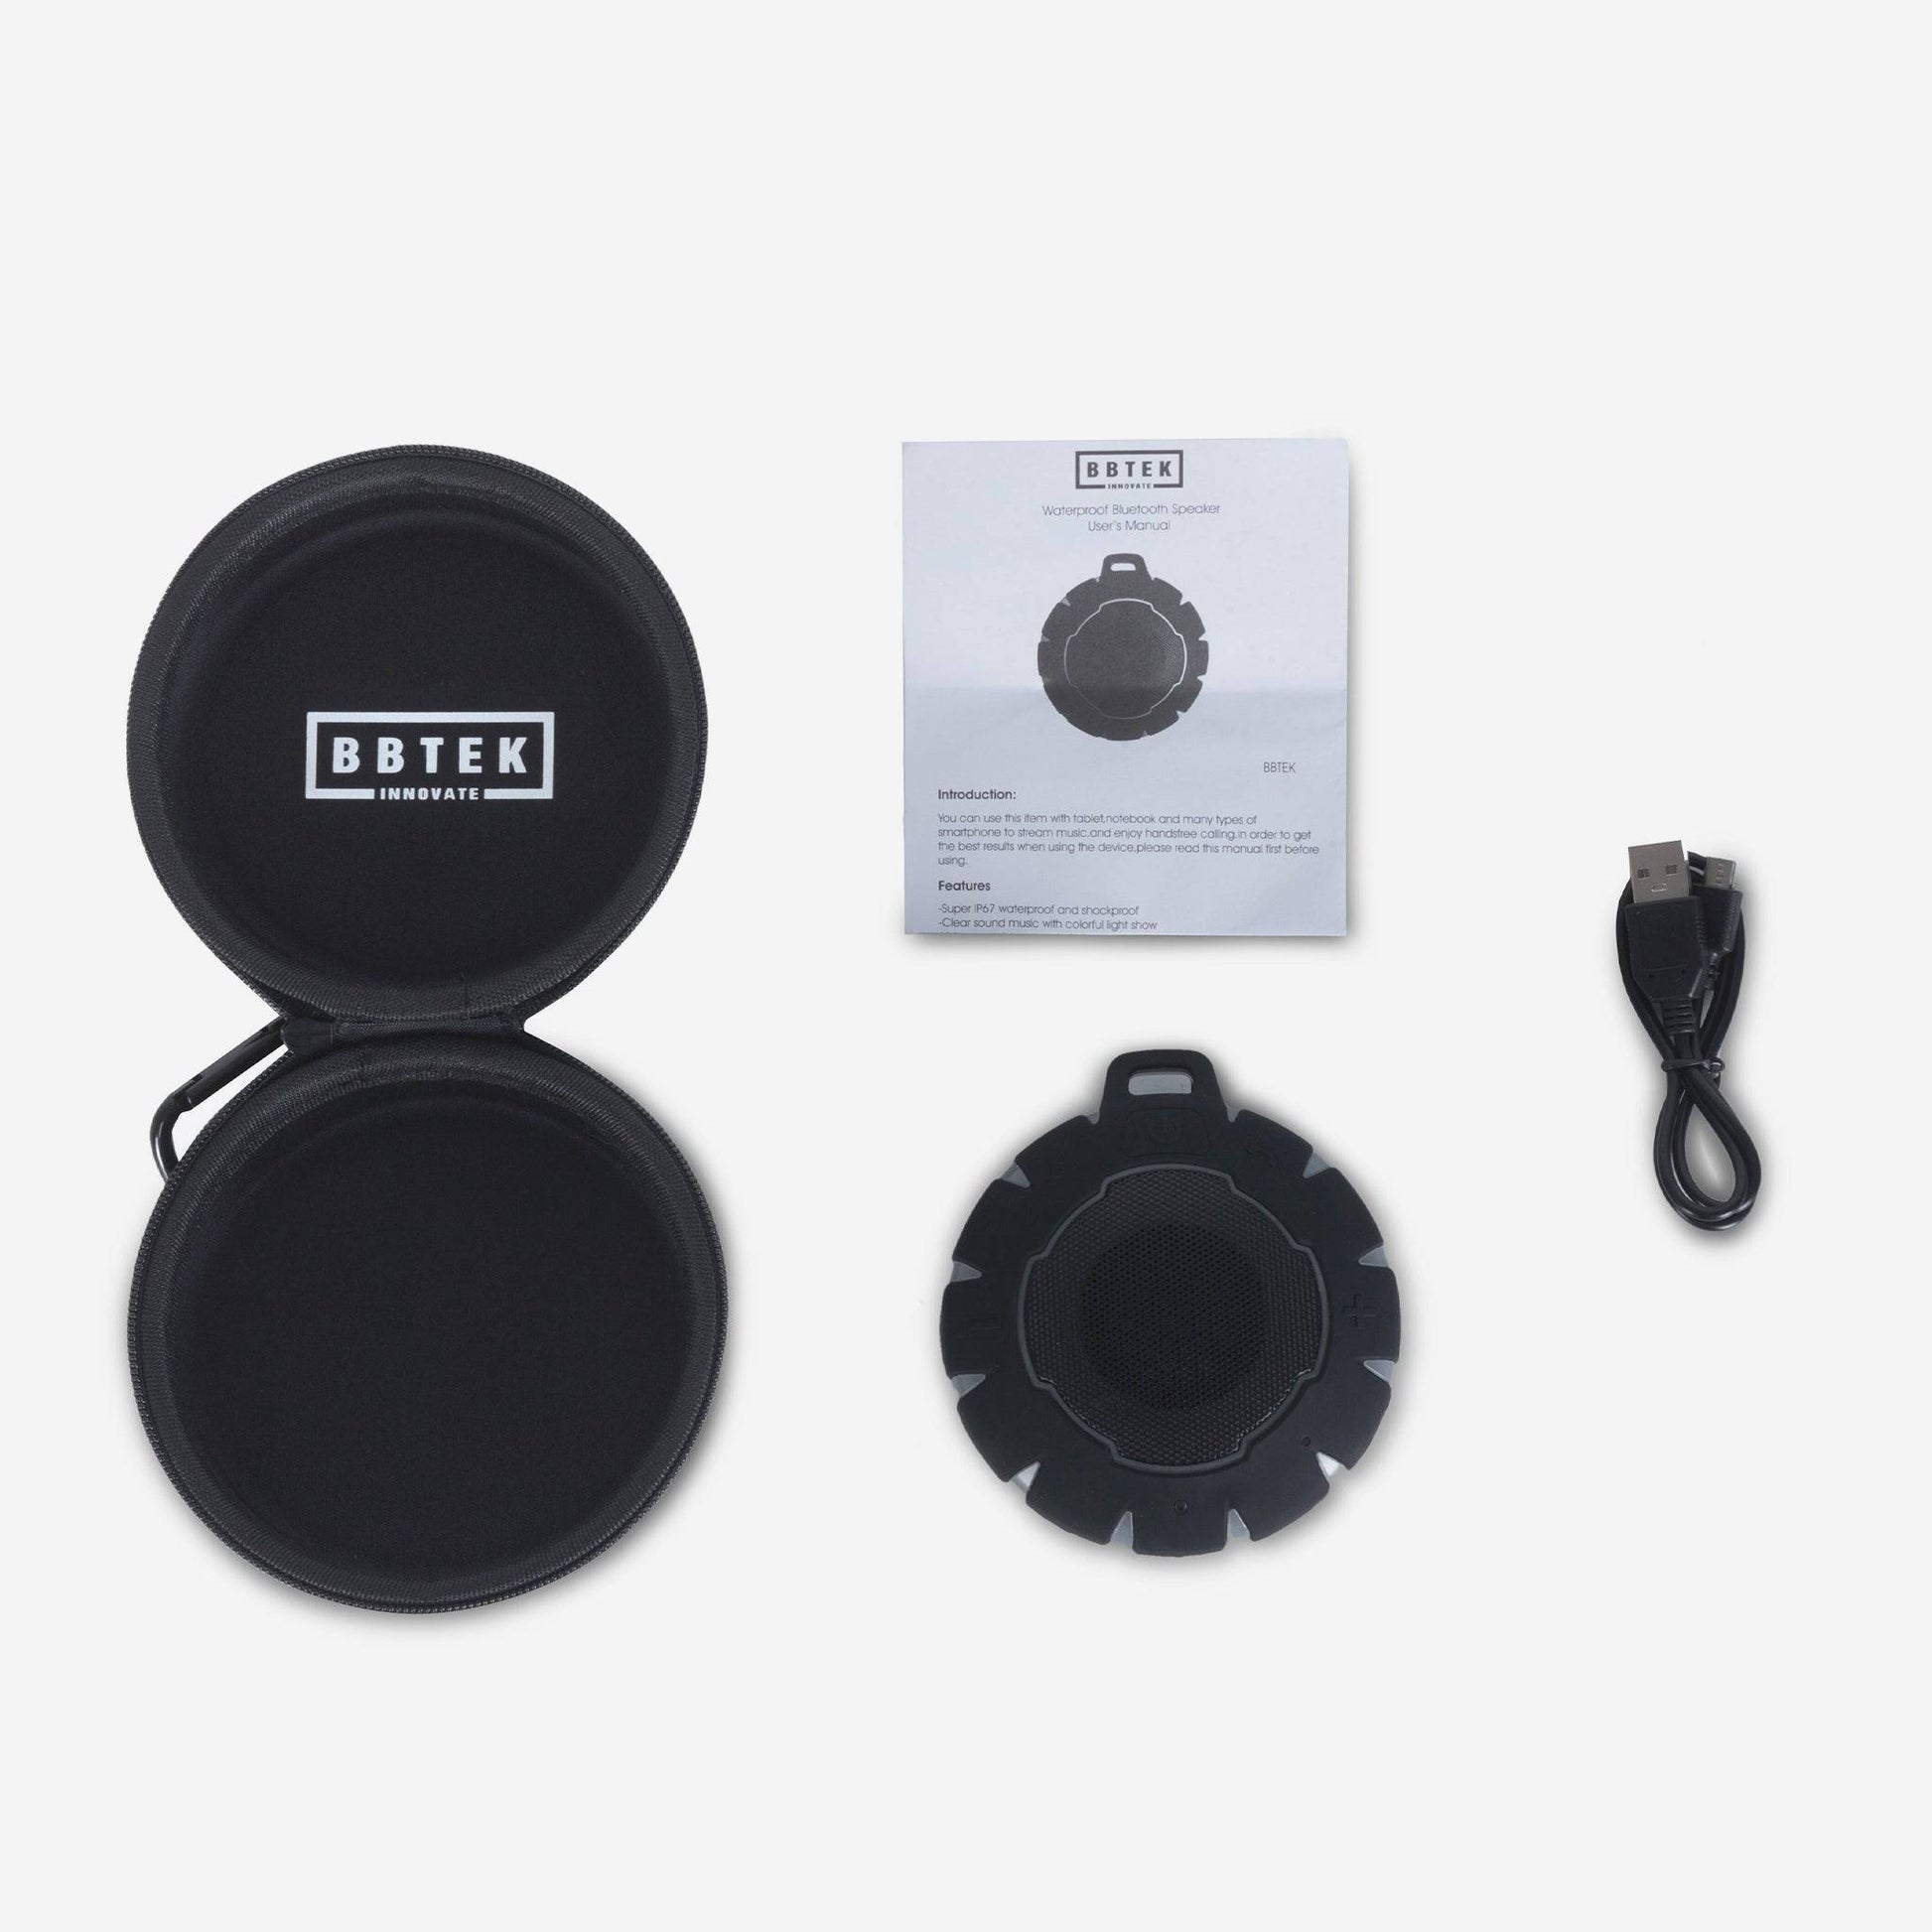 BBTEK Waterproof Lightshow Speaker - Shop BirdieBox